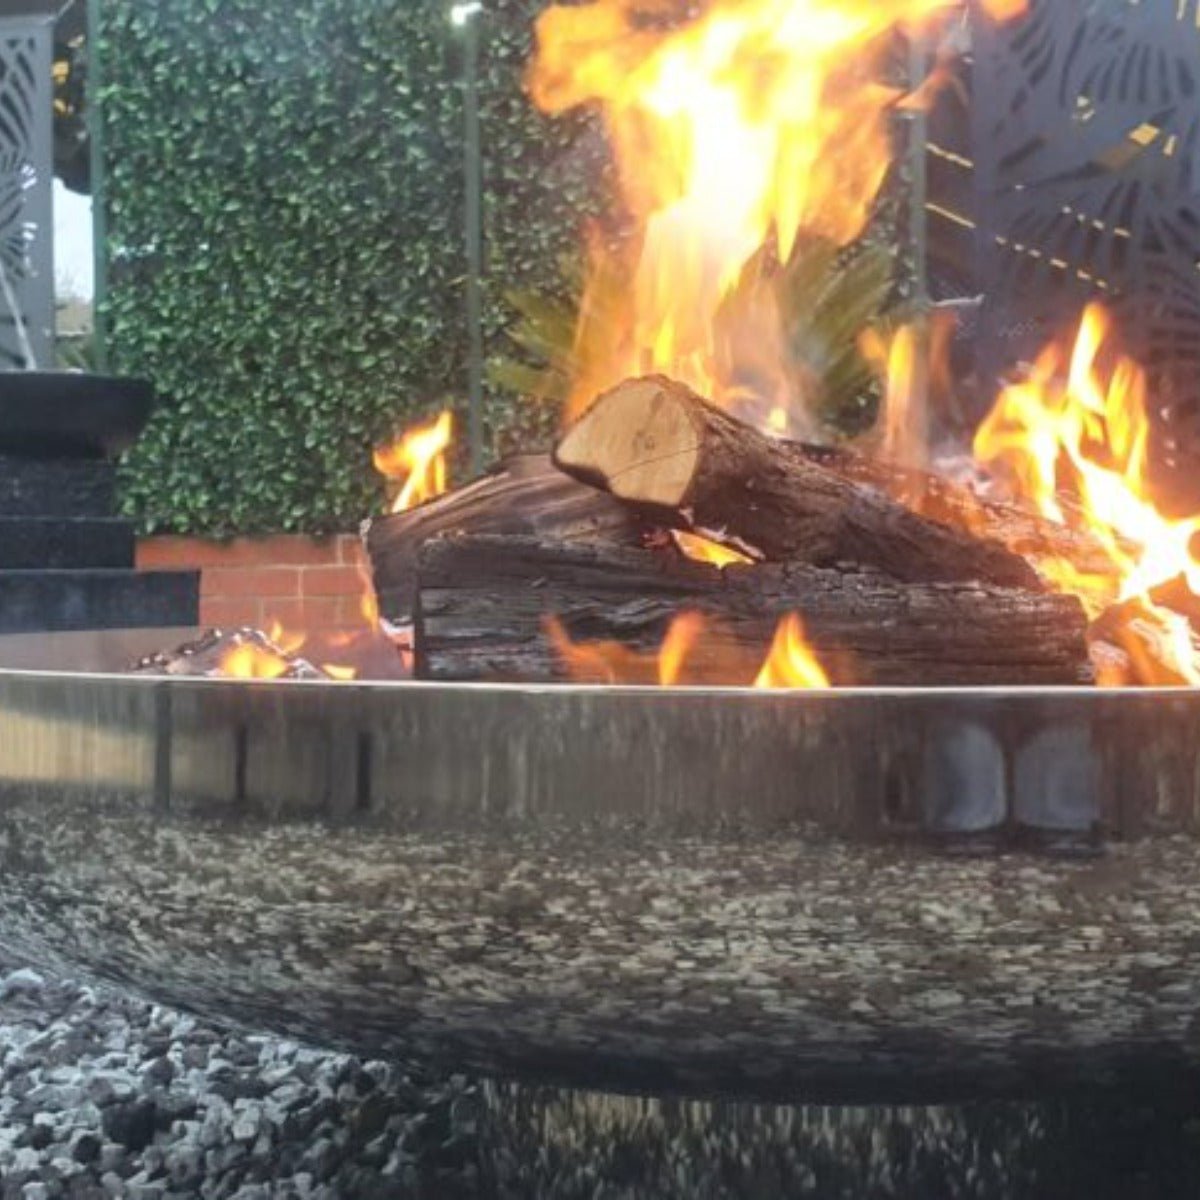 Cauldron Stainless Steel Fire Pit 80cm - Outdoorium